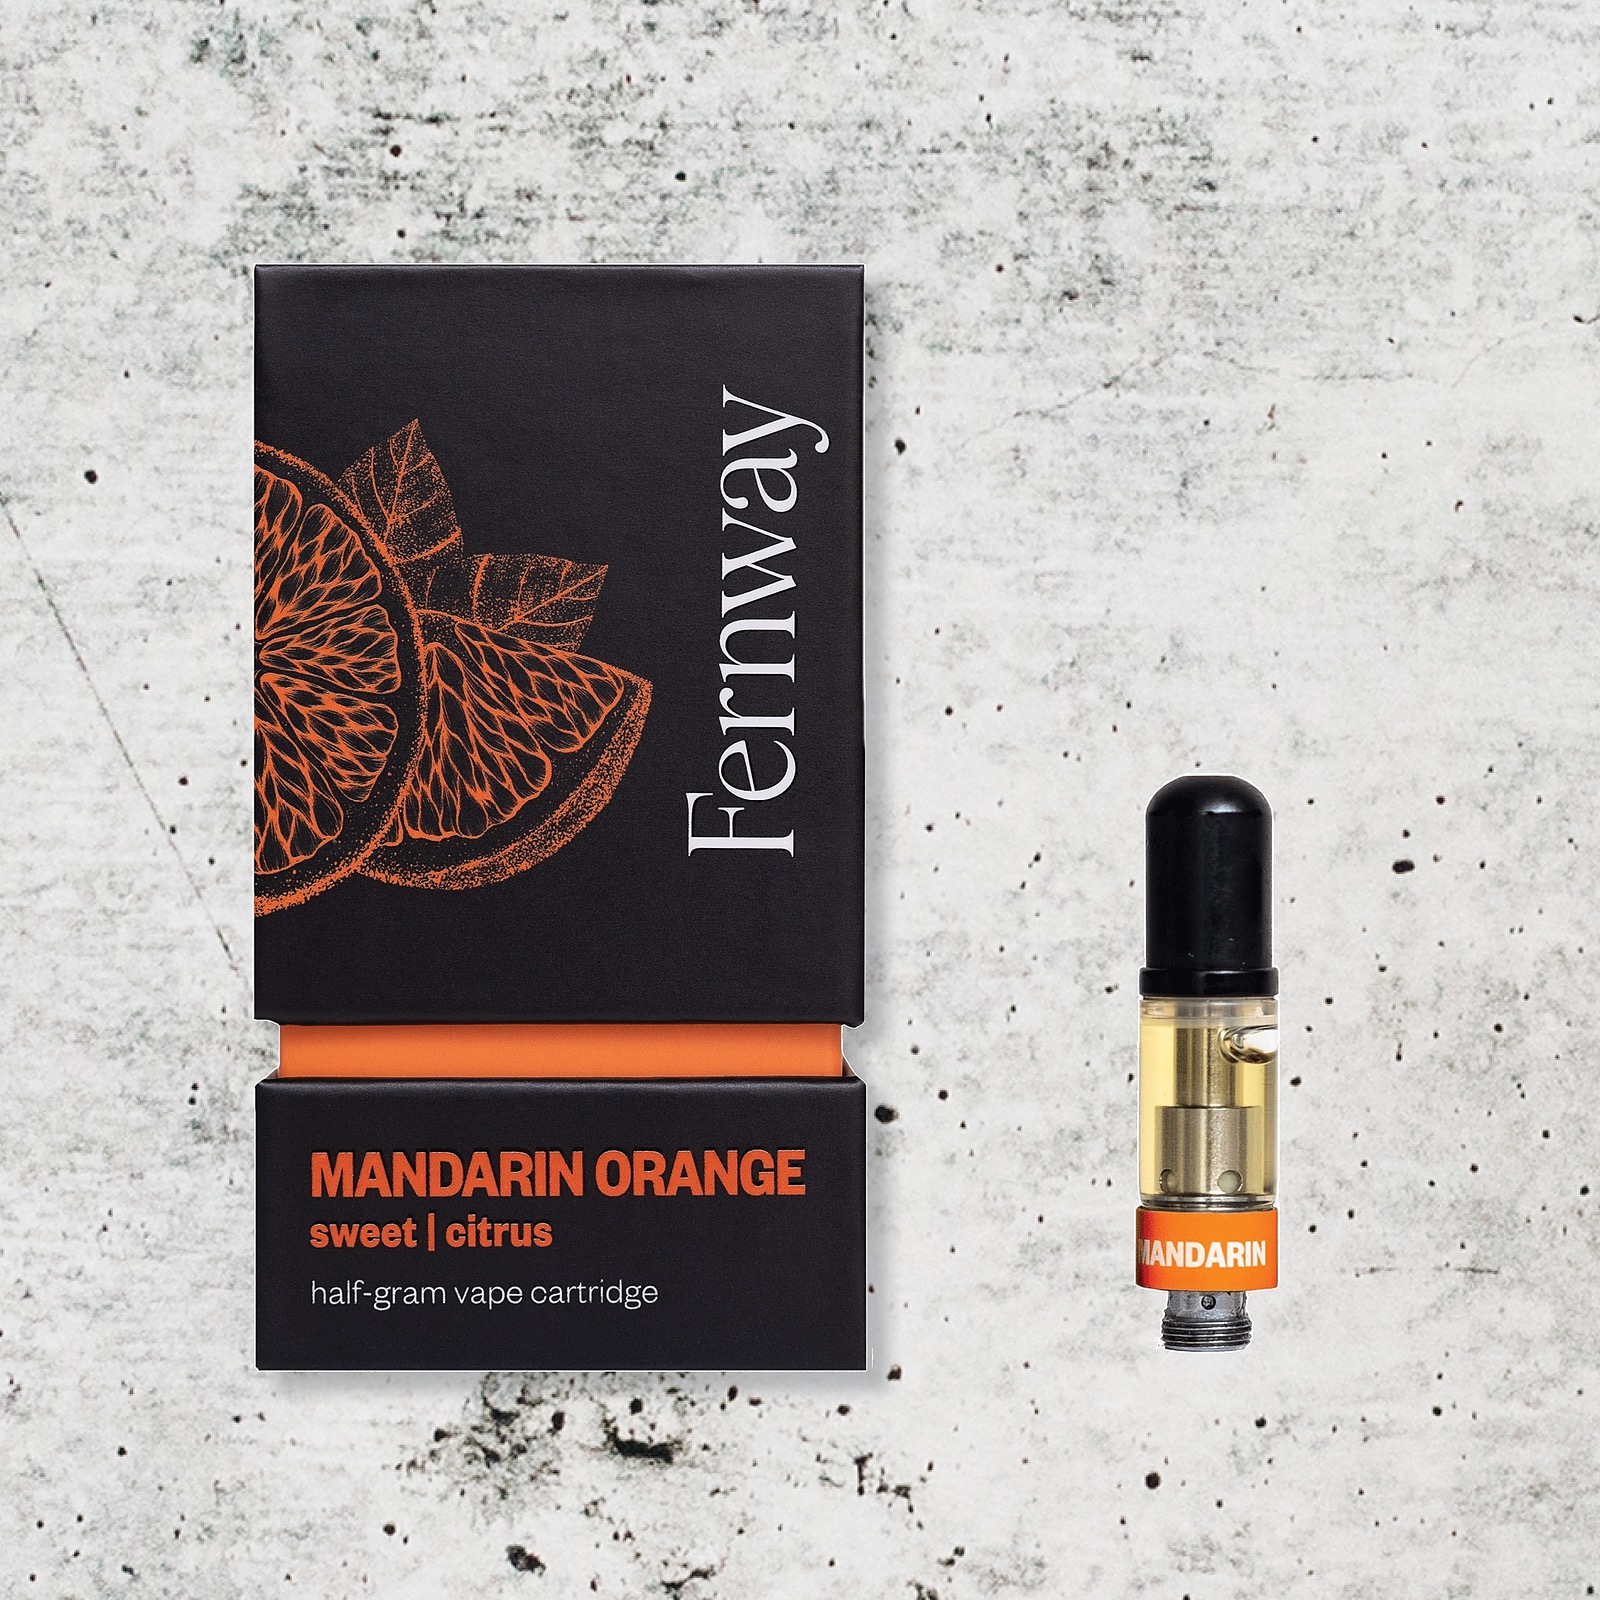 Fernway - Mandarin Orange 0.5g Vape Cartridge (S)